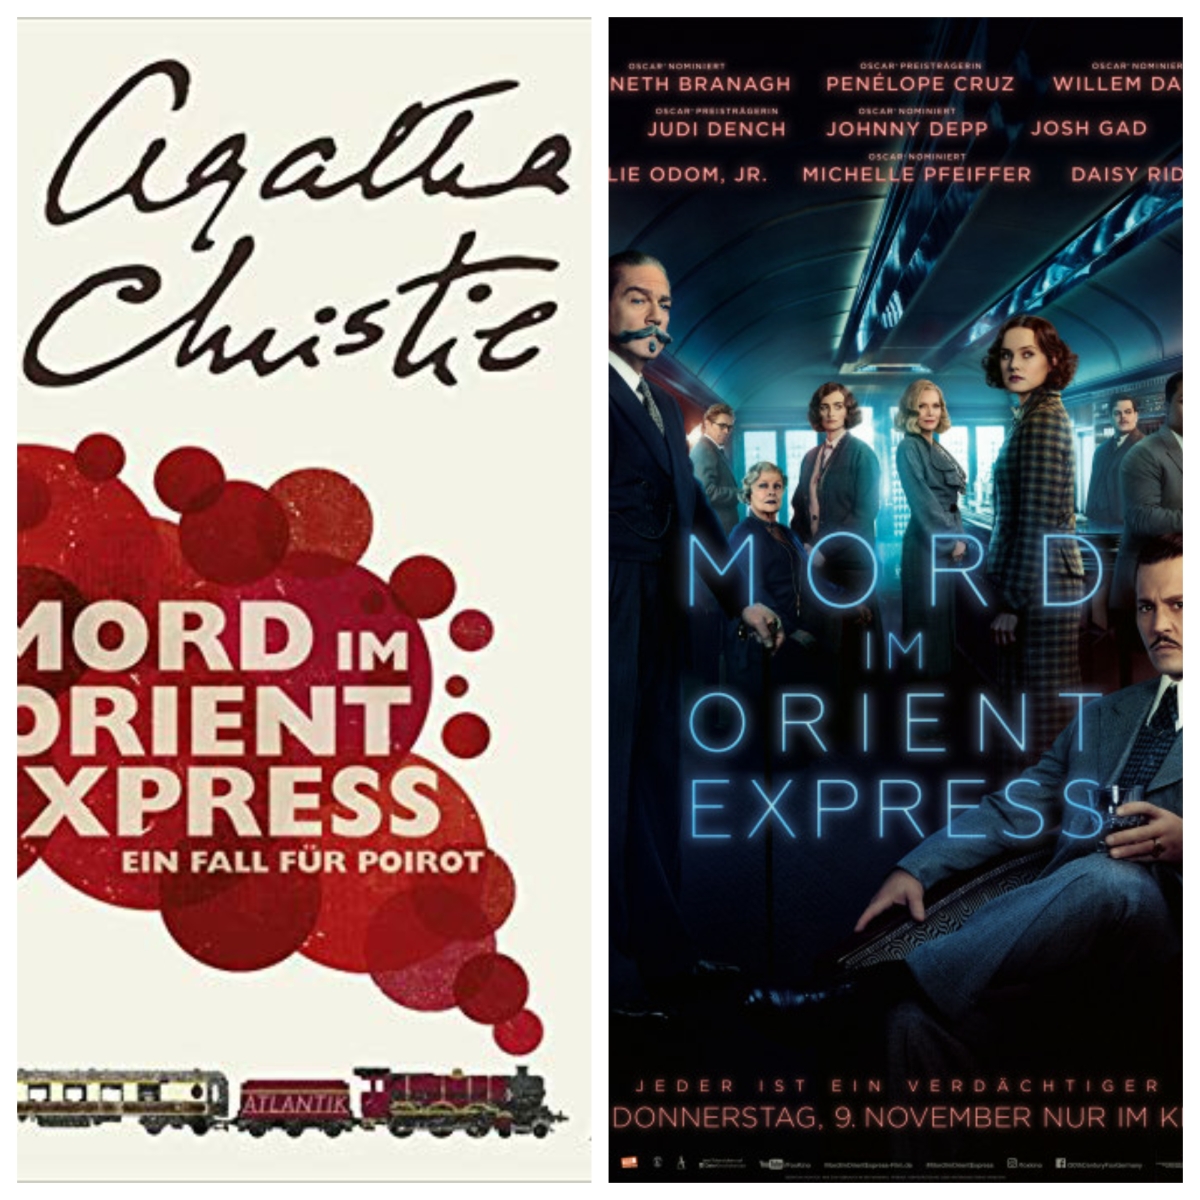 [#Werbung]Literaturverfilmung Agathe Christie, Mord im Orientexpress